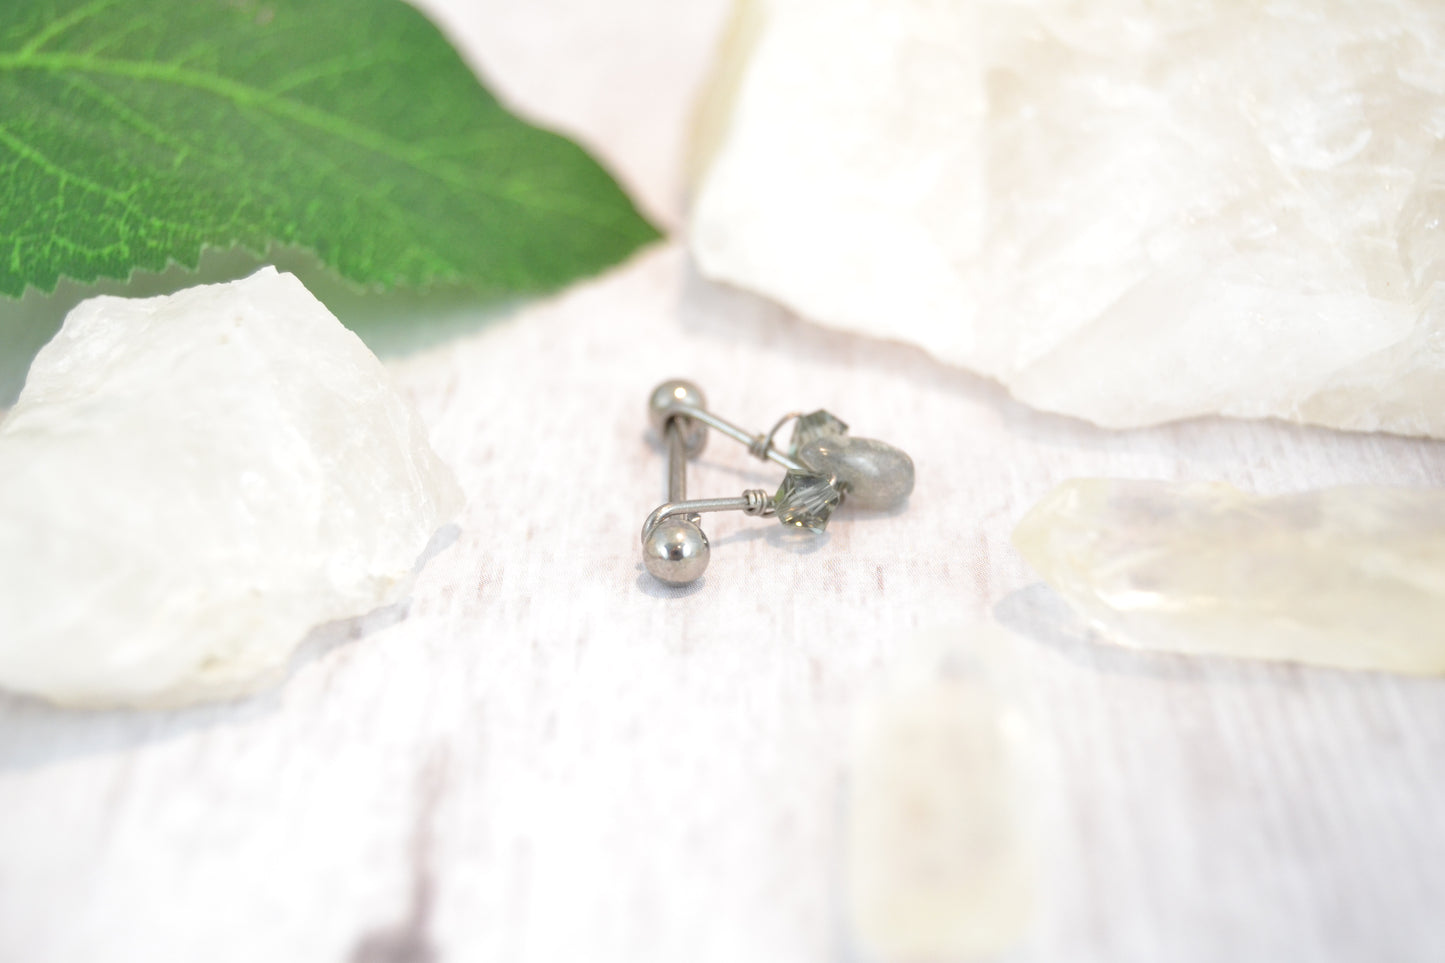 Healing Crystal V Shaped Titanium Nipple Ring - 1 pc